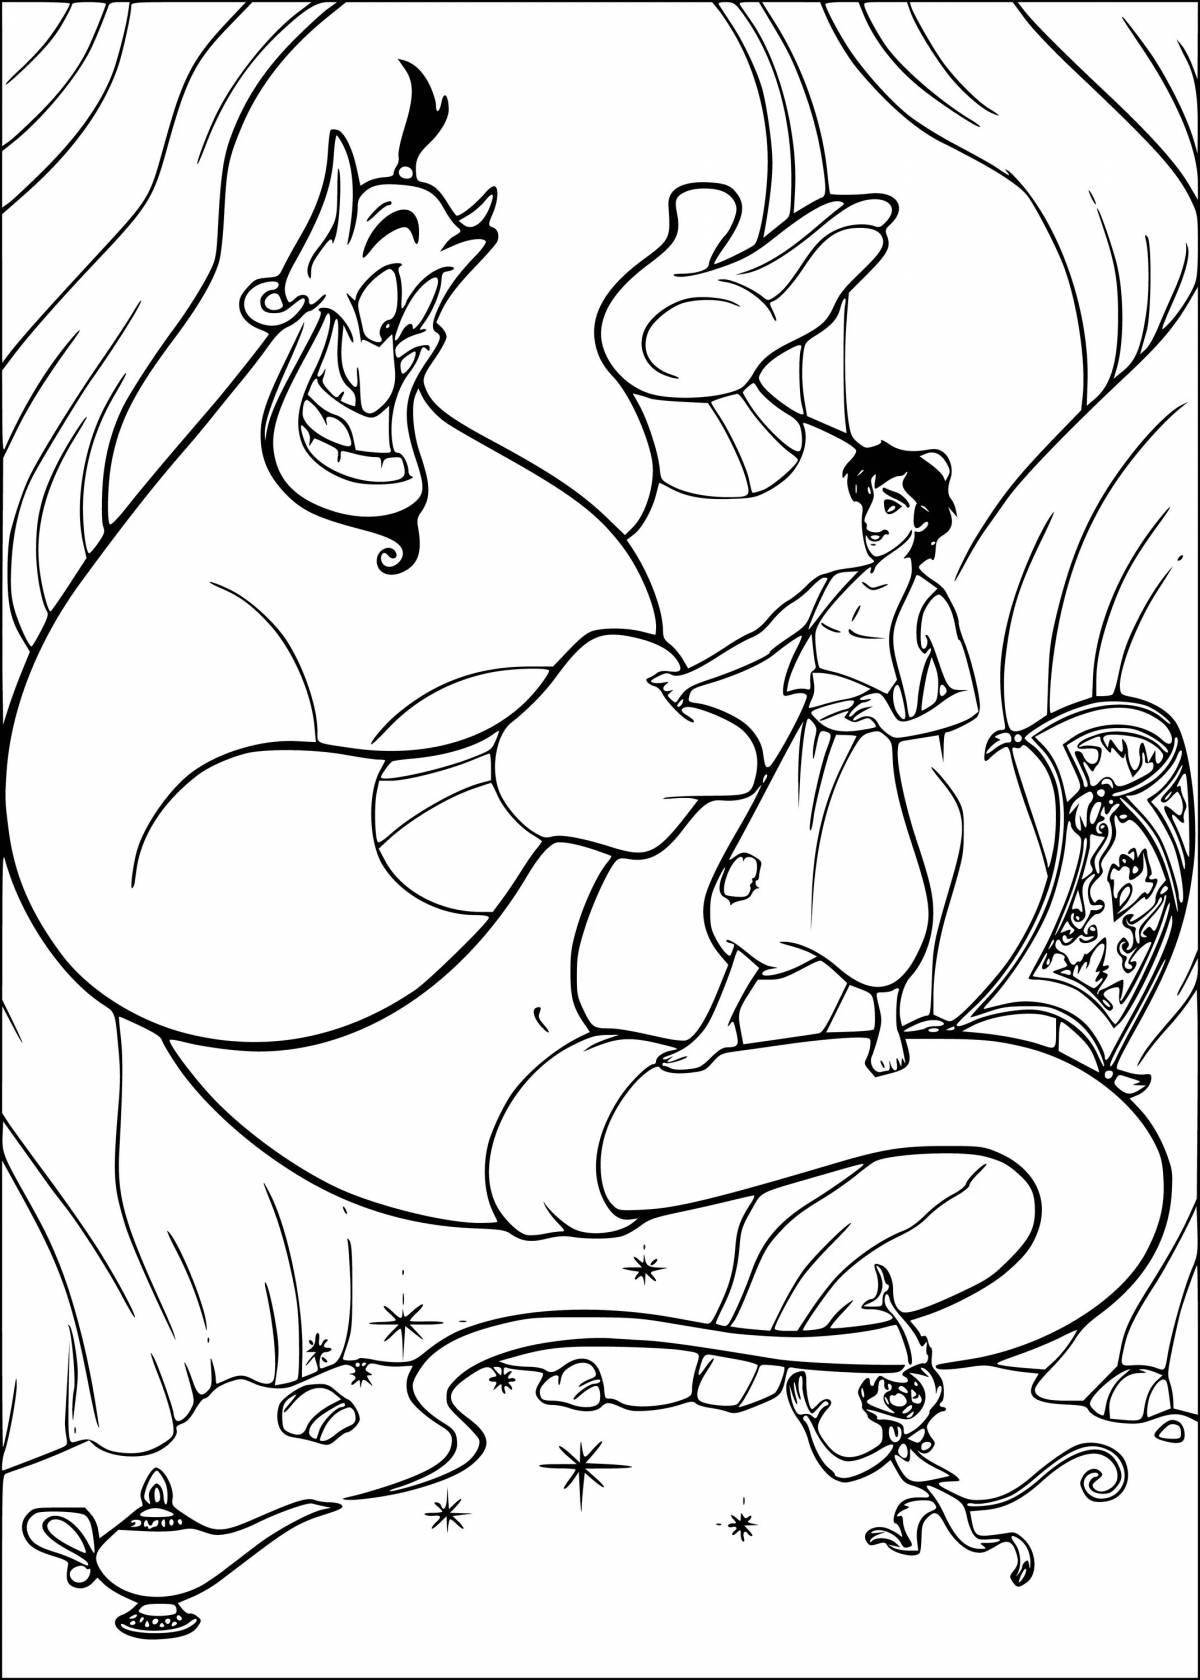 Great Aladdin coloring book